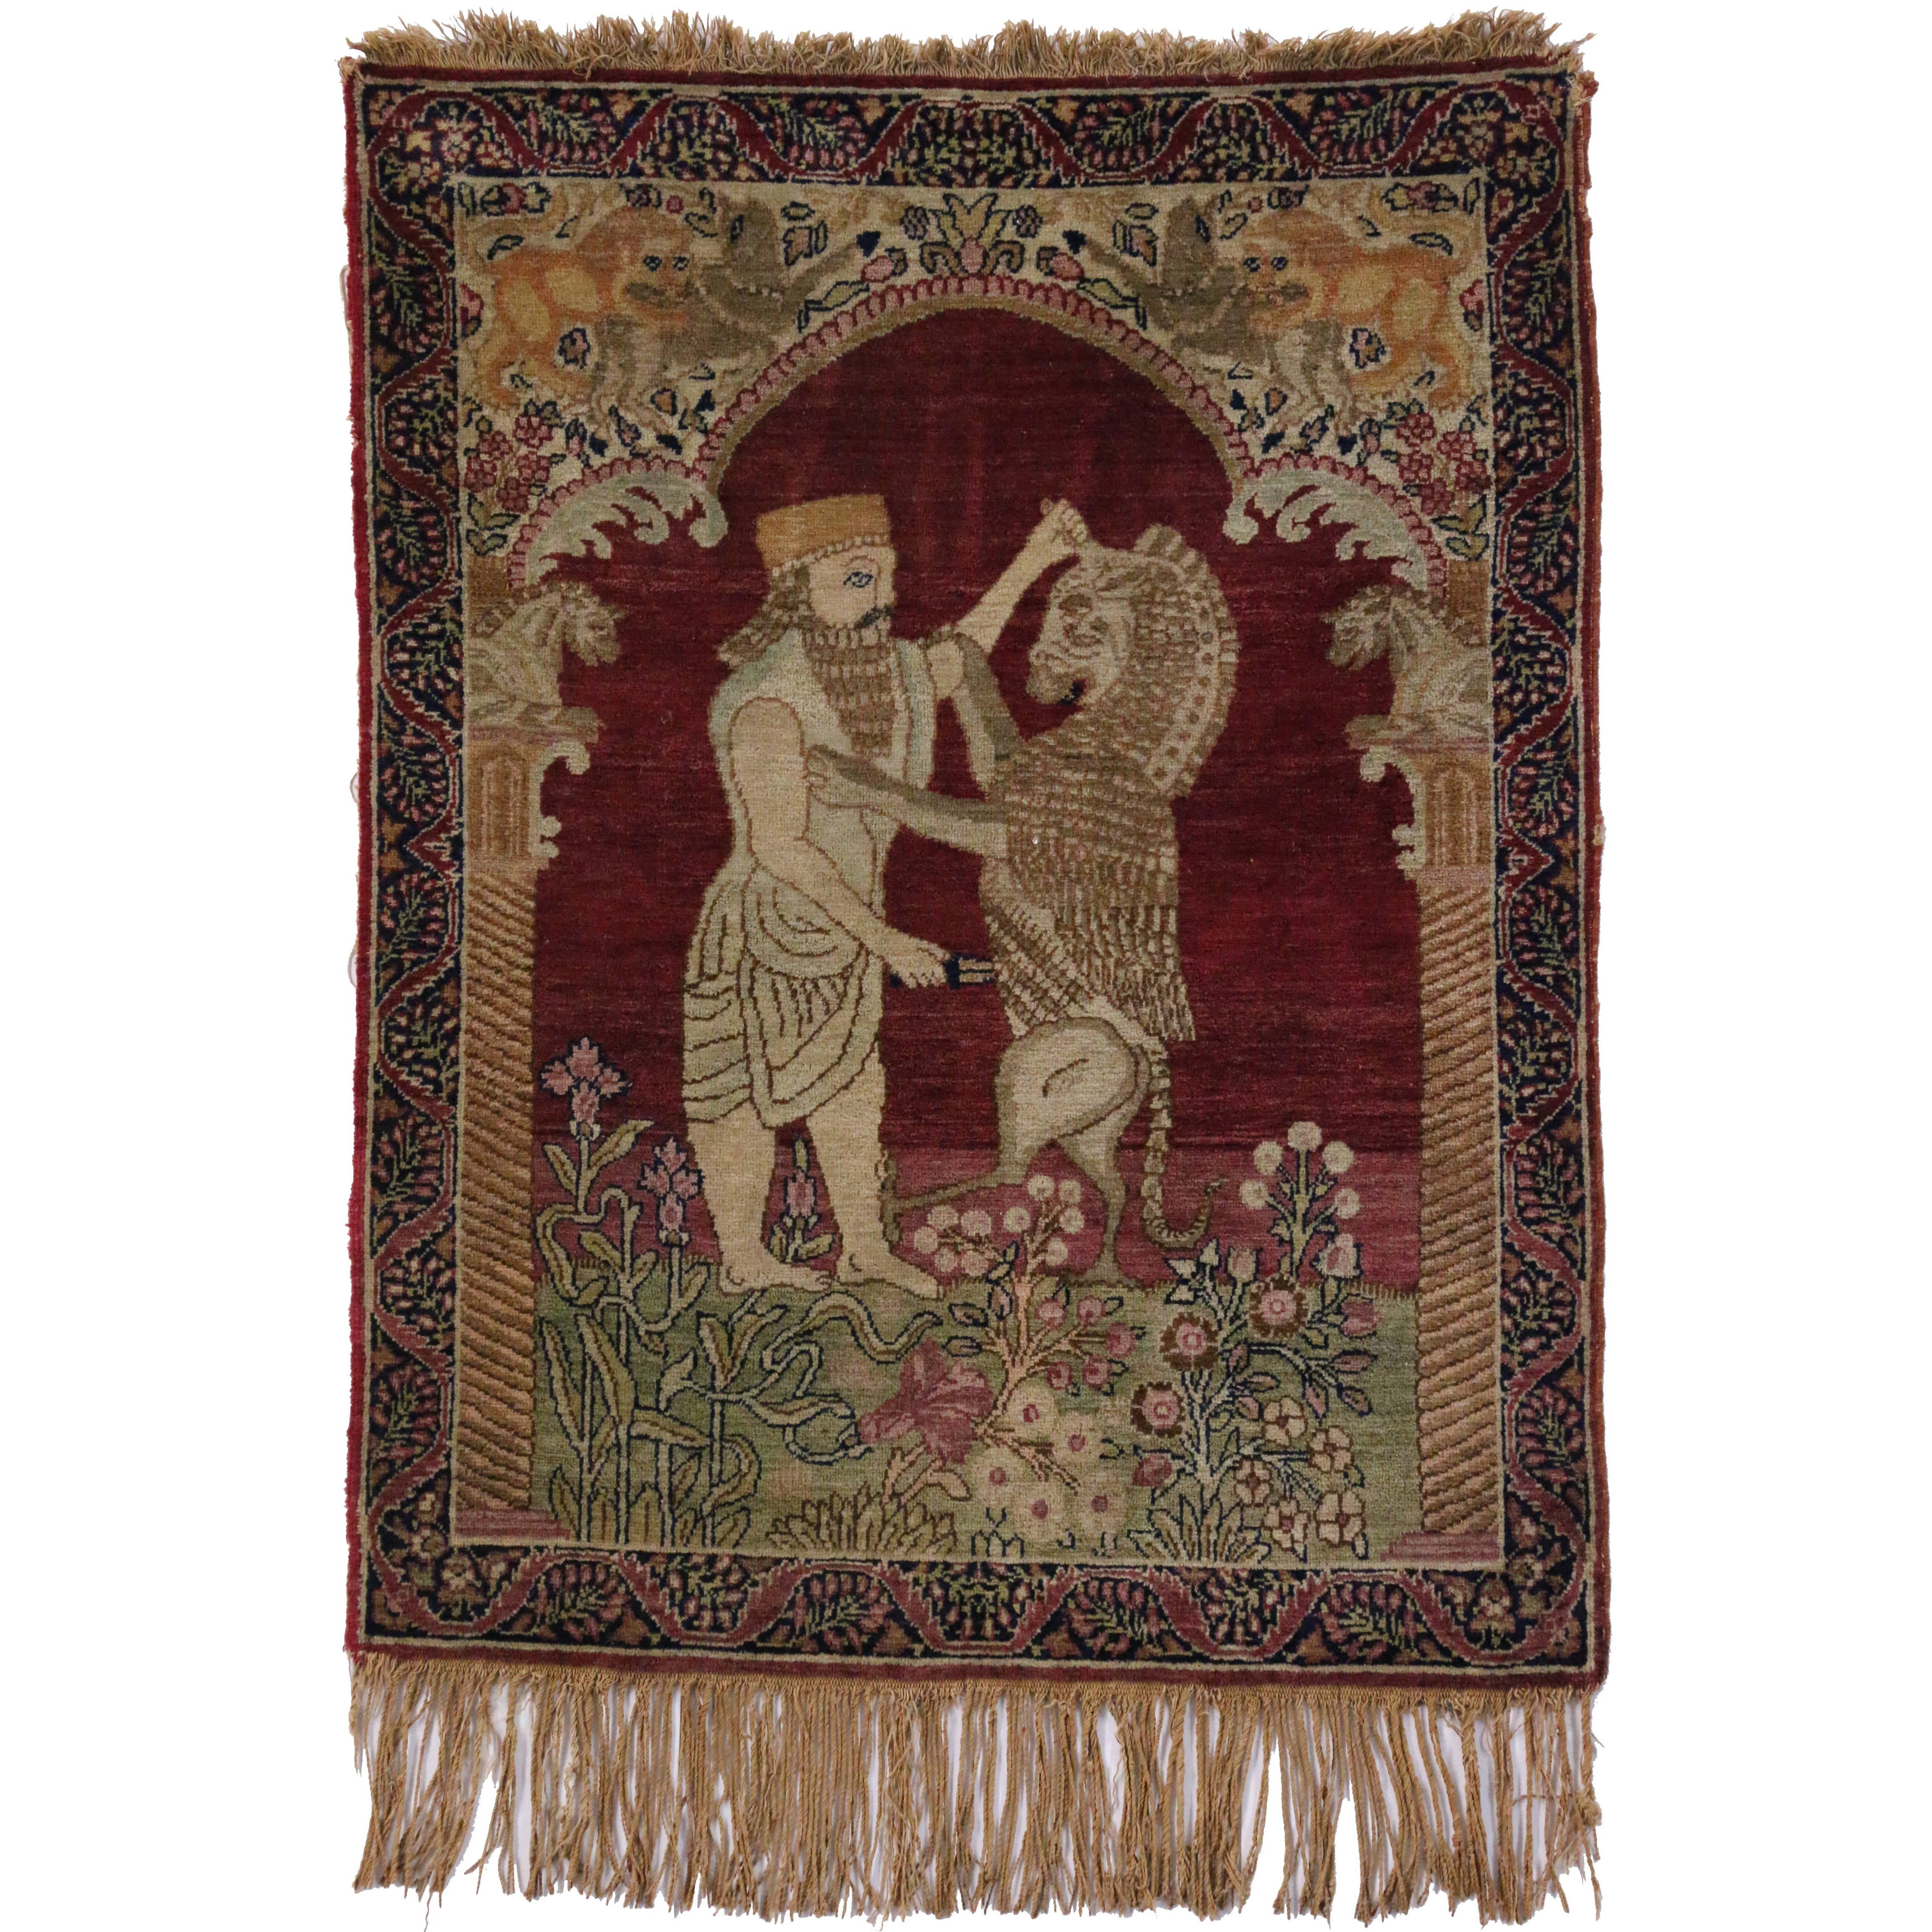 Antique Kerman Pictorial Rug Mythological Tapestry Lion & King Darius Achaemenid